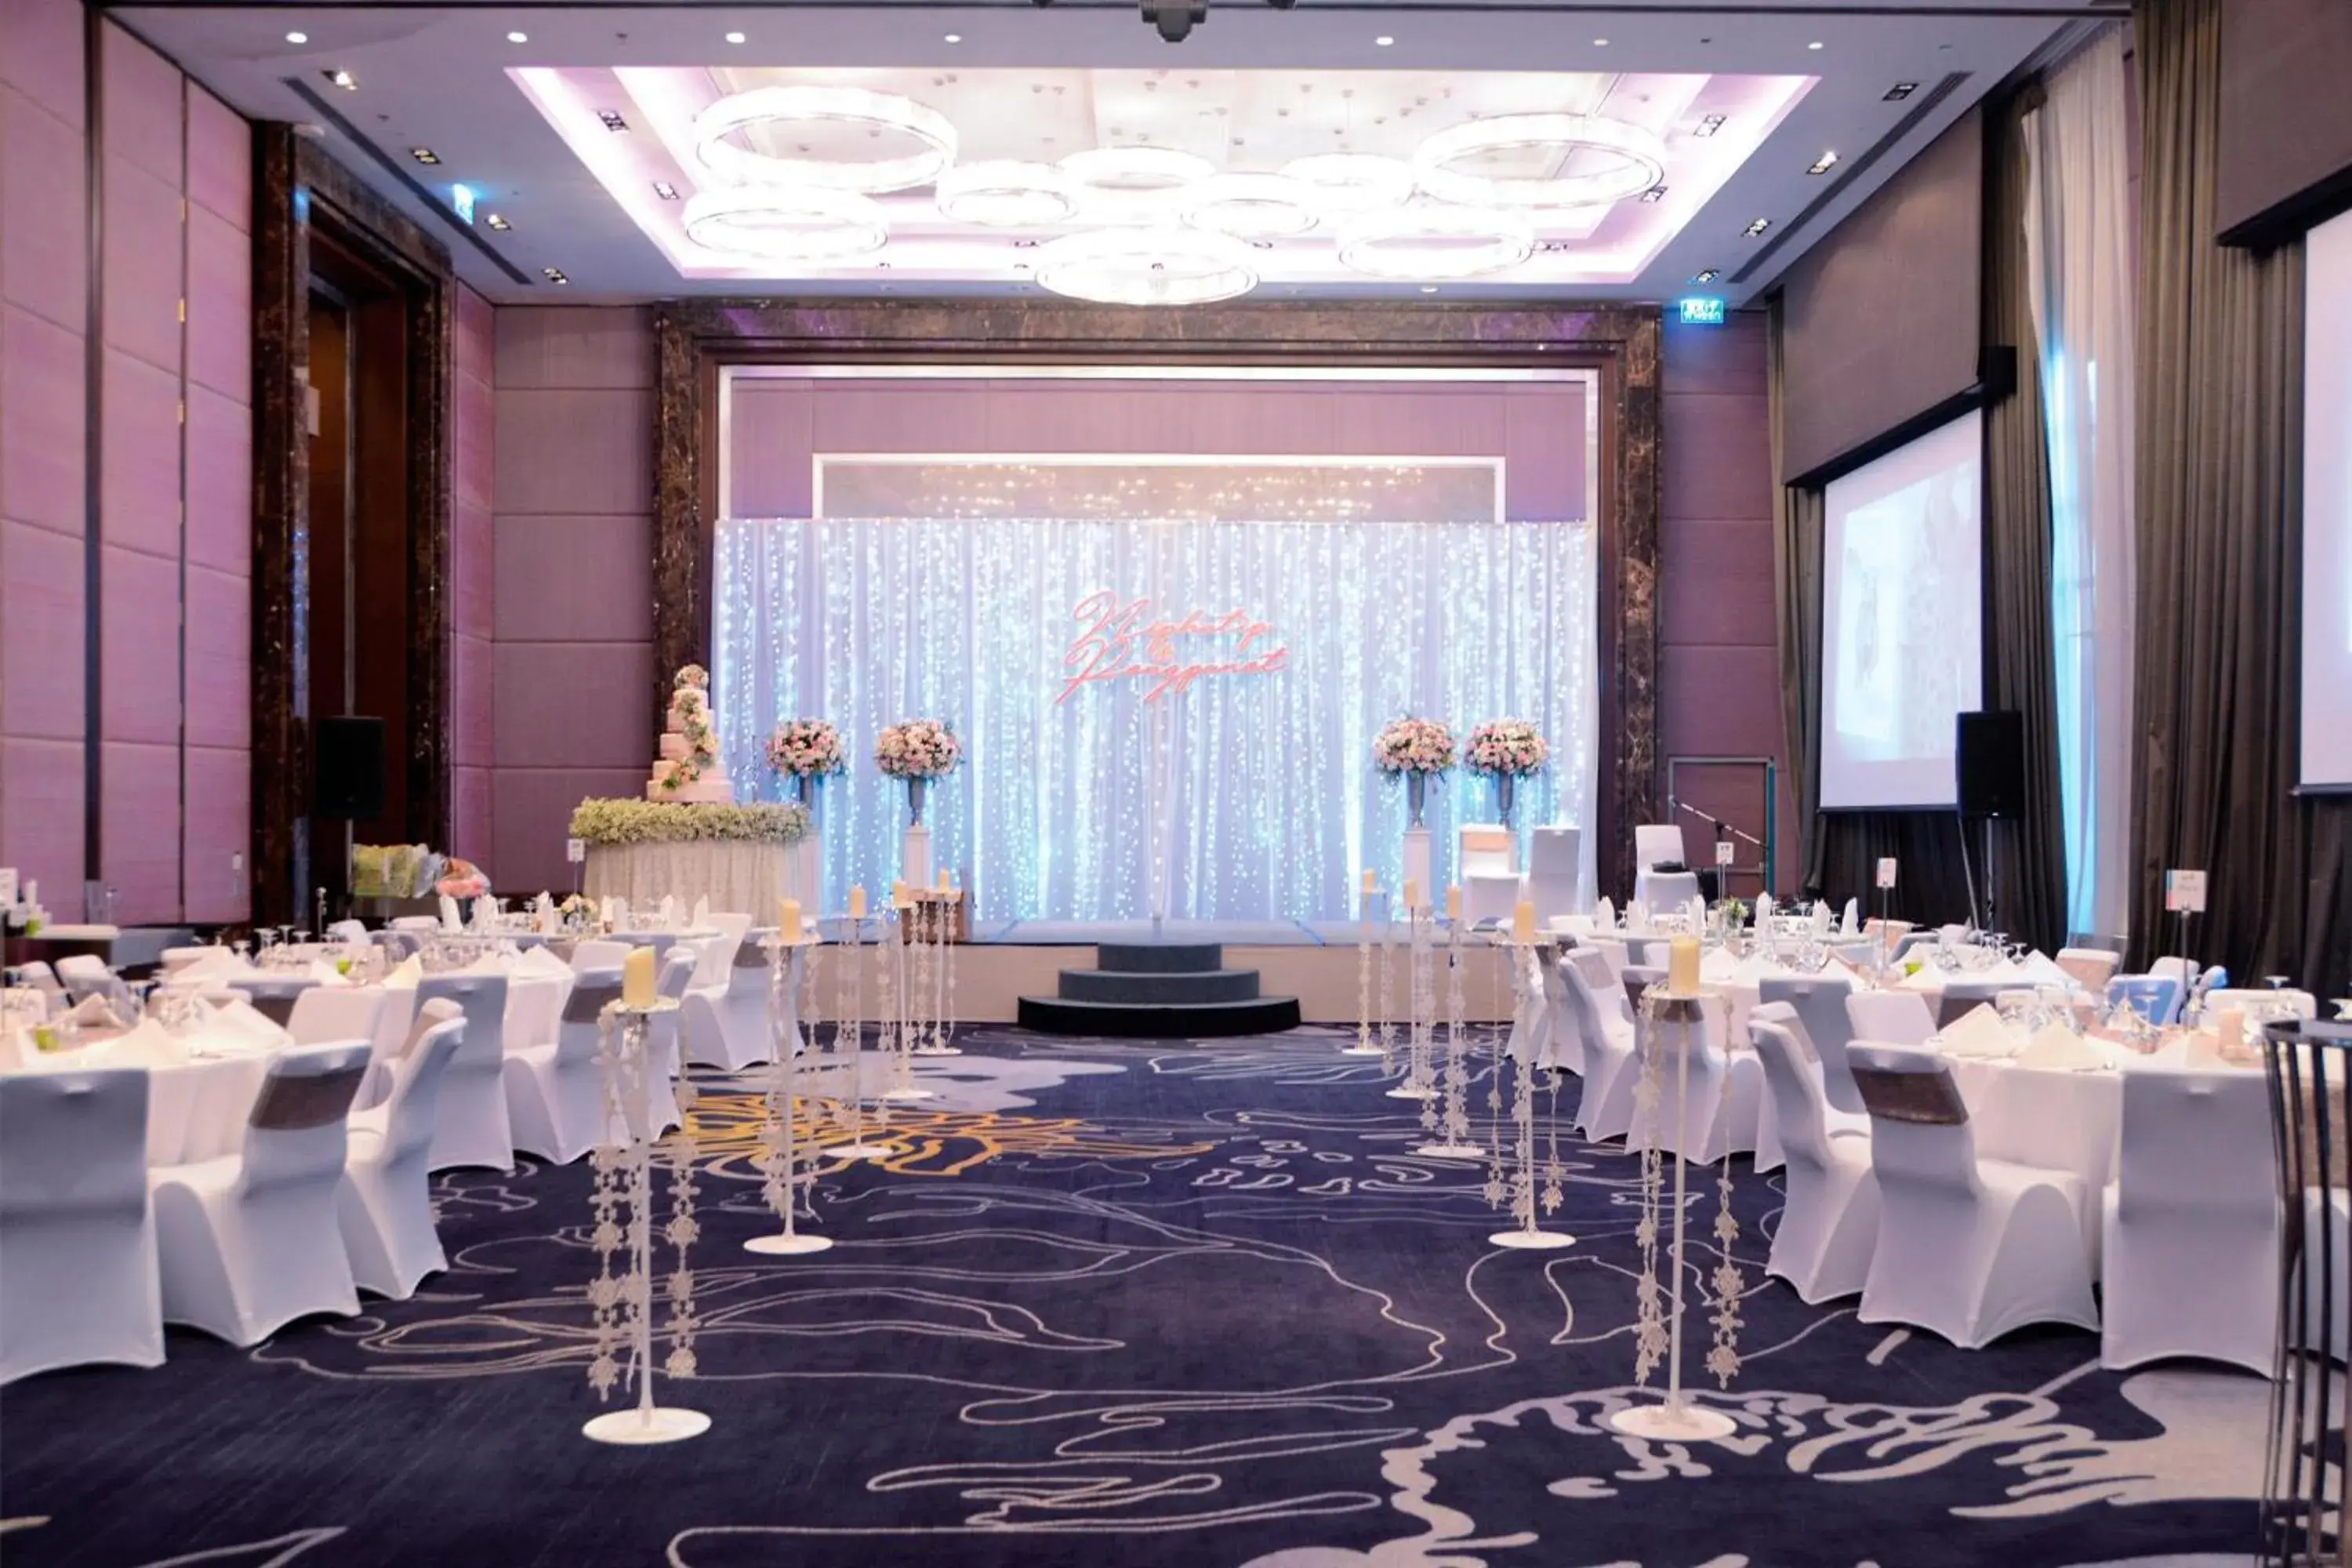 Banquet/Function facilities, Banquet Facilities in Le Meridien Suvarnabhumi, Bangkok Golf Resort and Spa